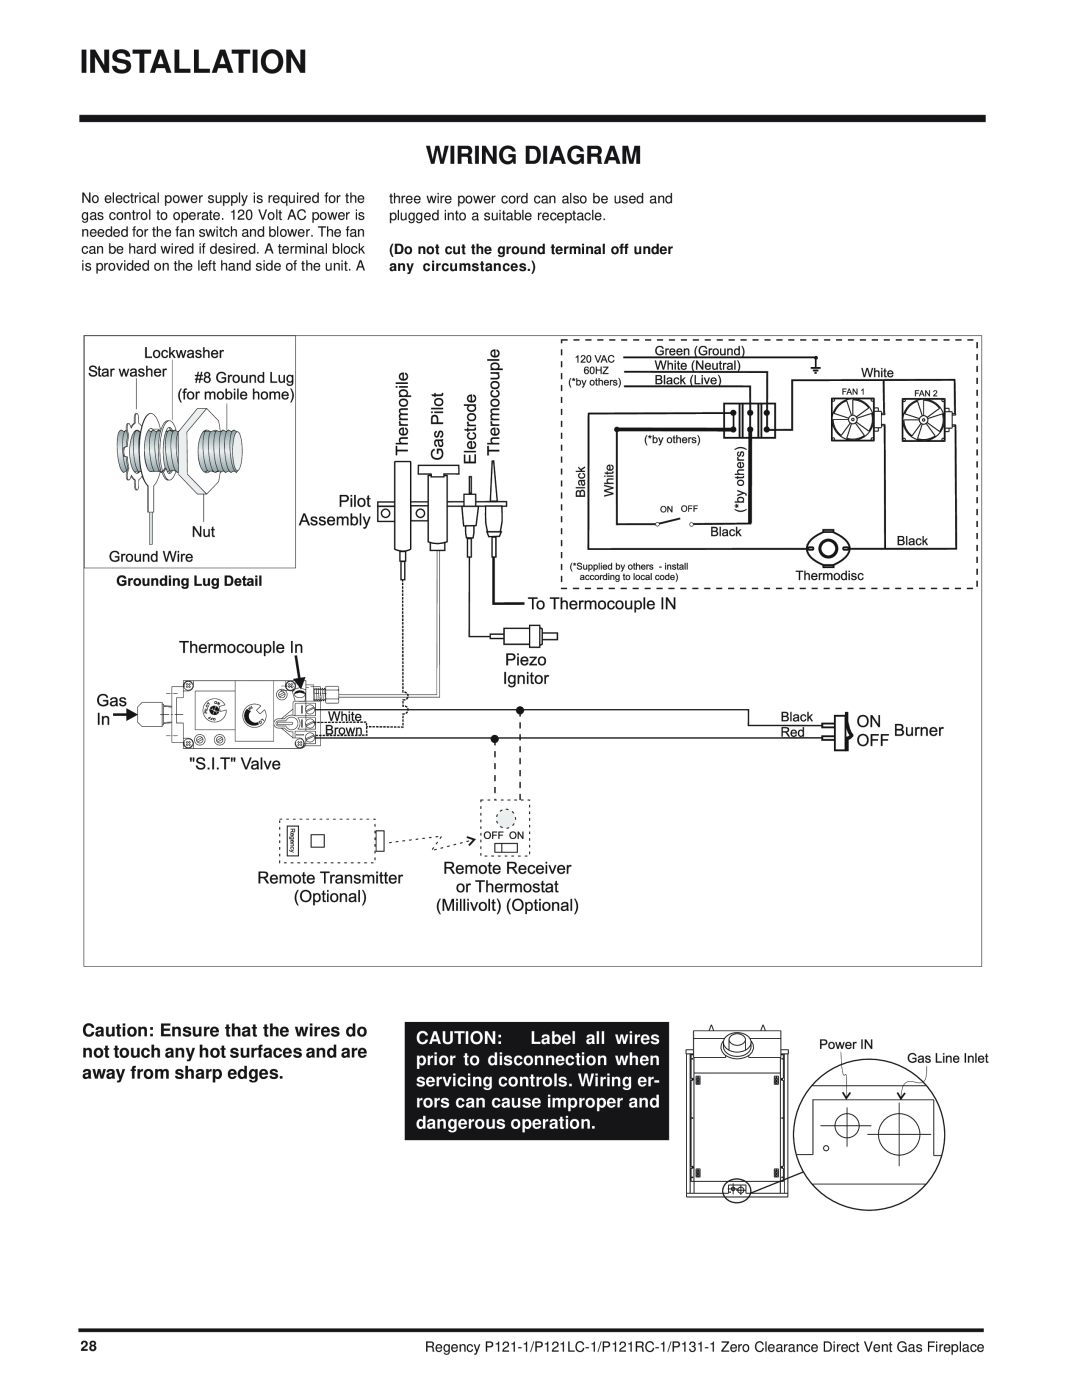 Regency P121RC, P121LC, P131 installation manual Installation, Wiring Diagram 